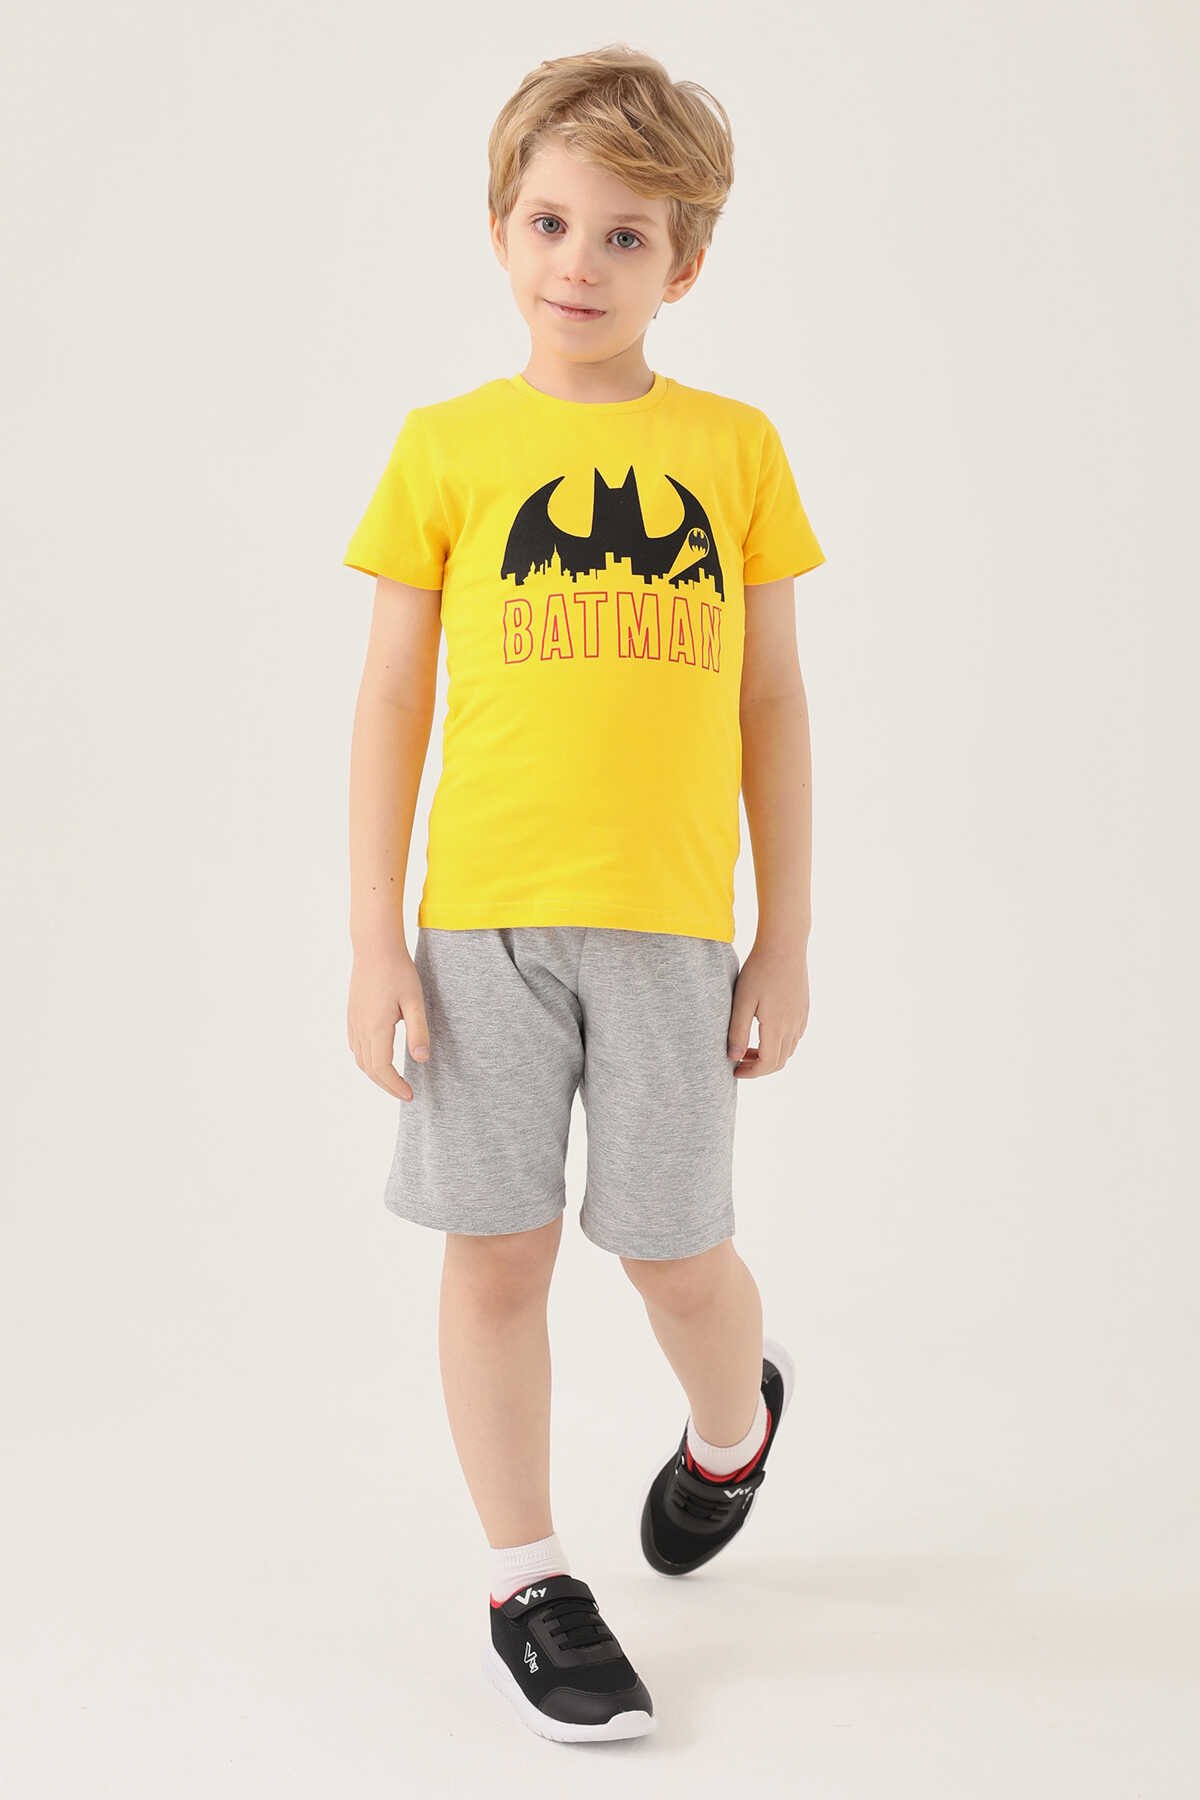 Batman - Batman L1579-2 Erkek Çocuk T-Shirt Sarı